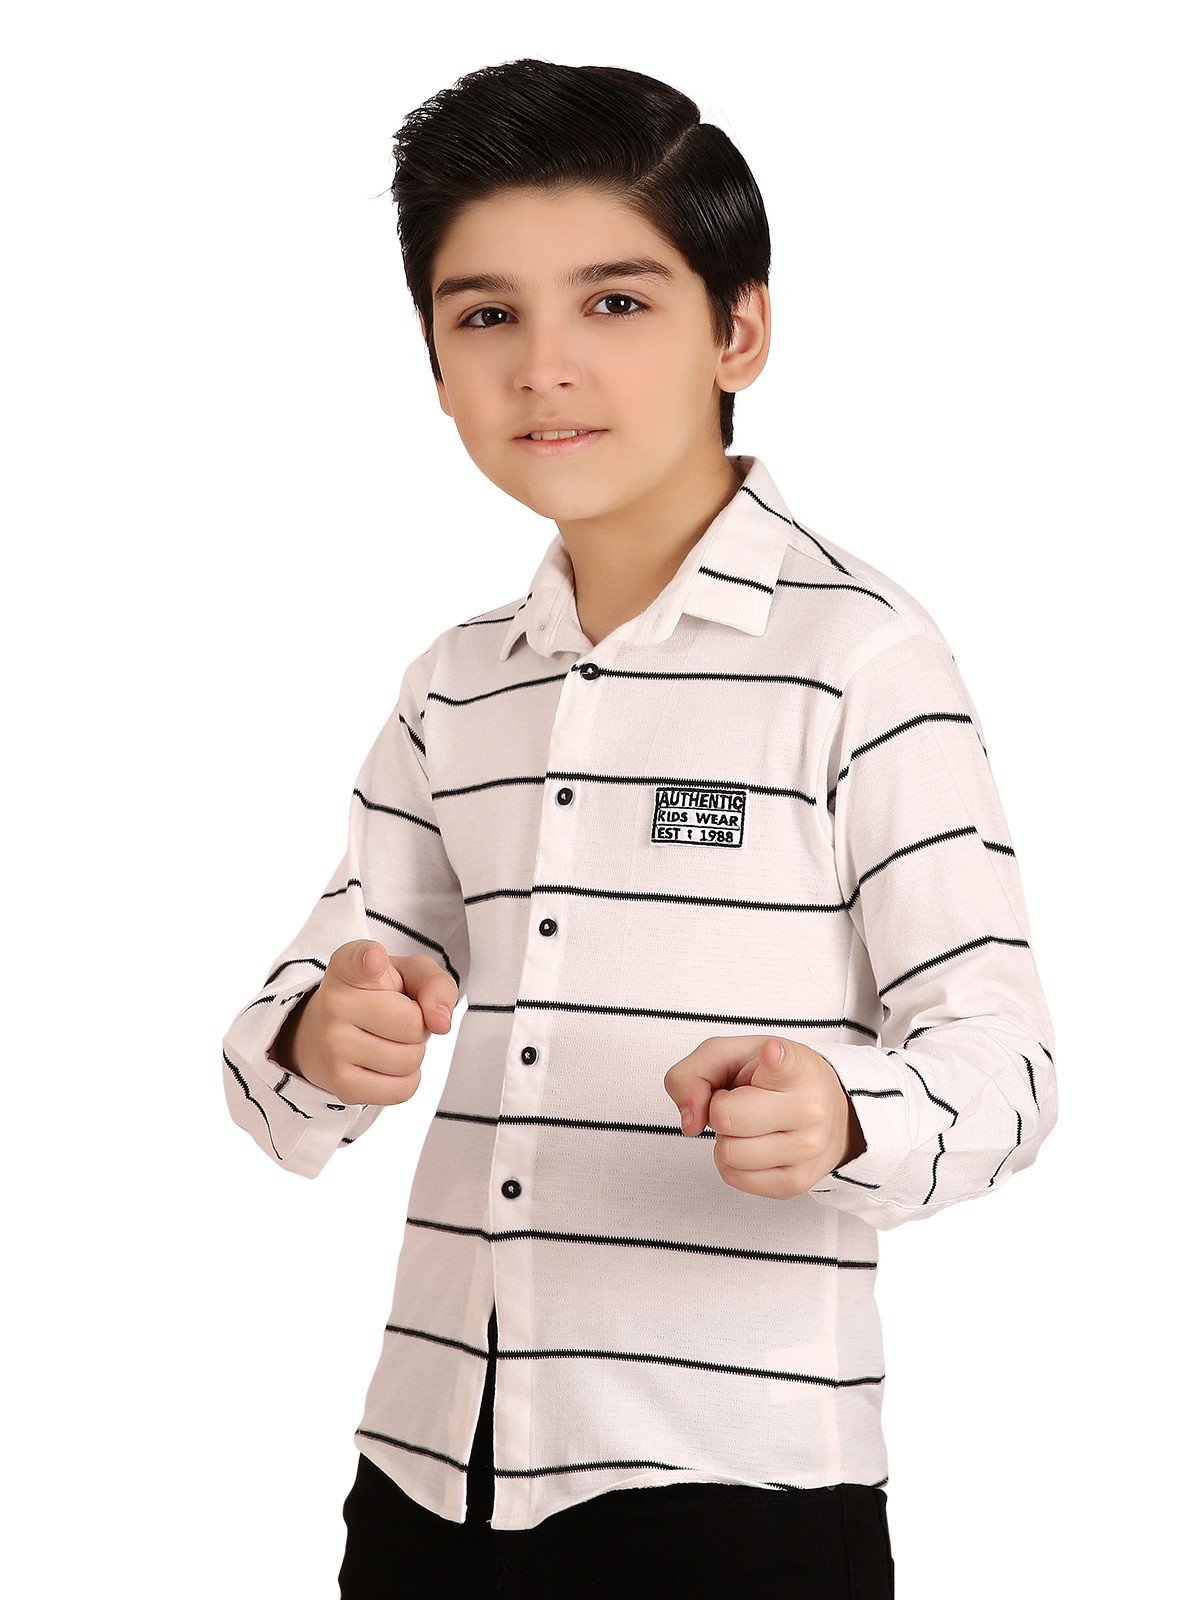 Boy's White Shirt - EBTS19-27267